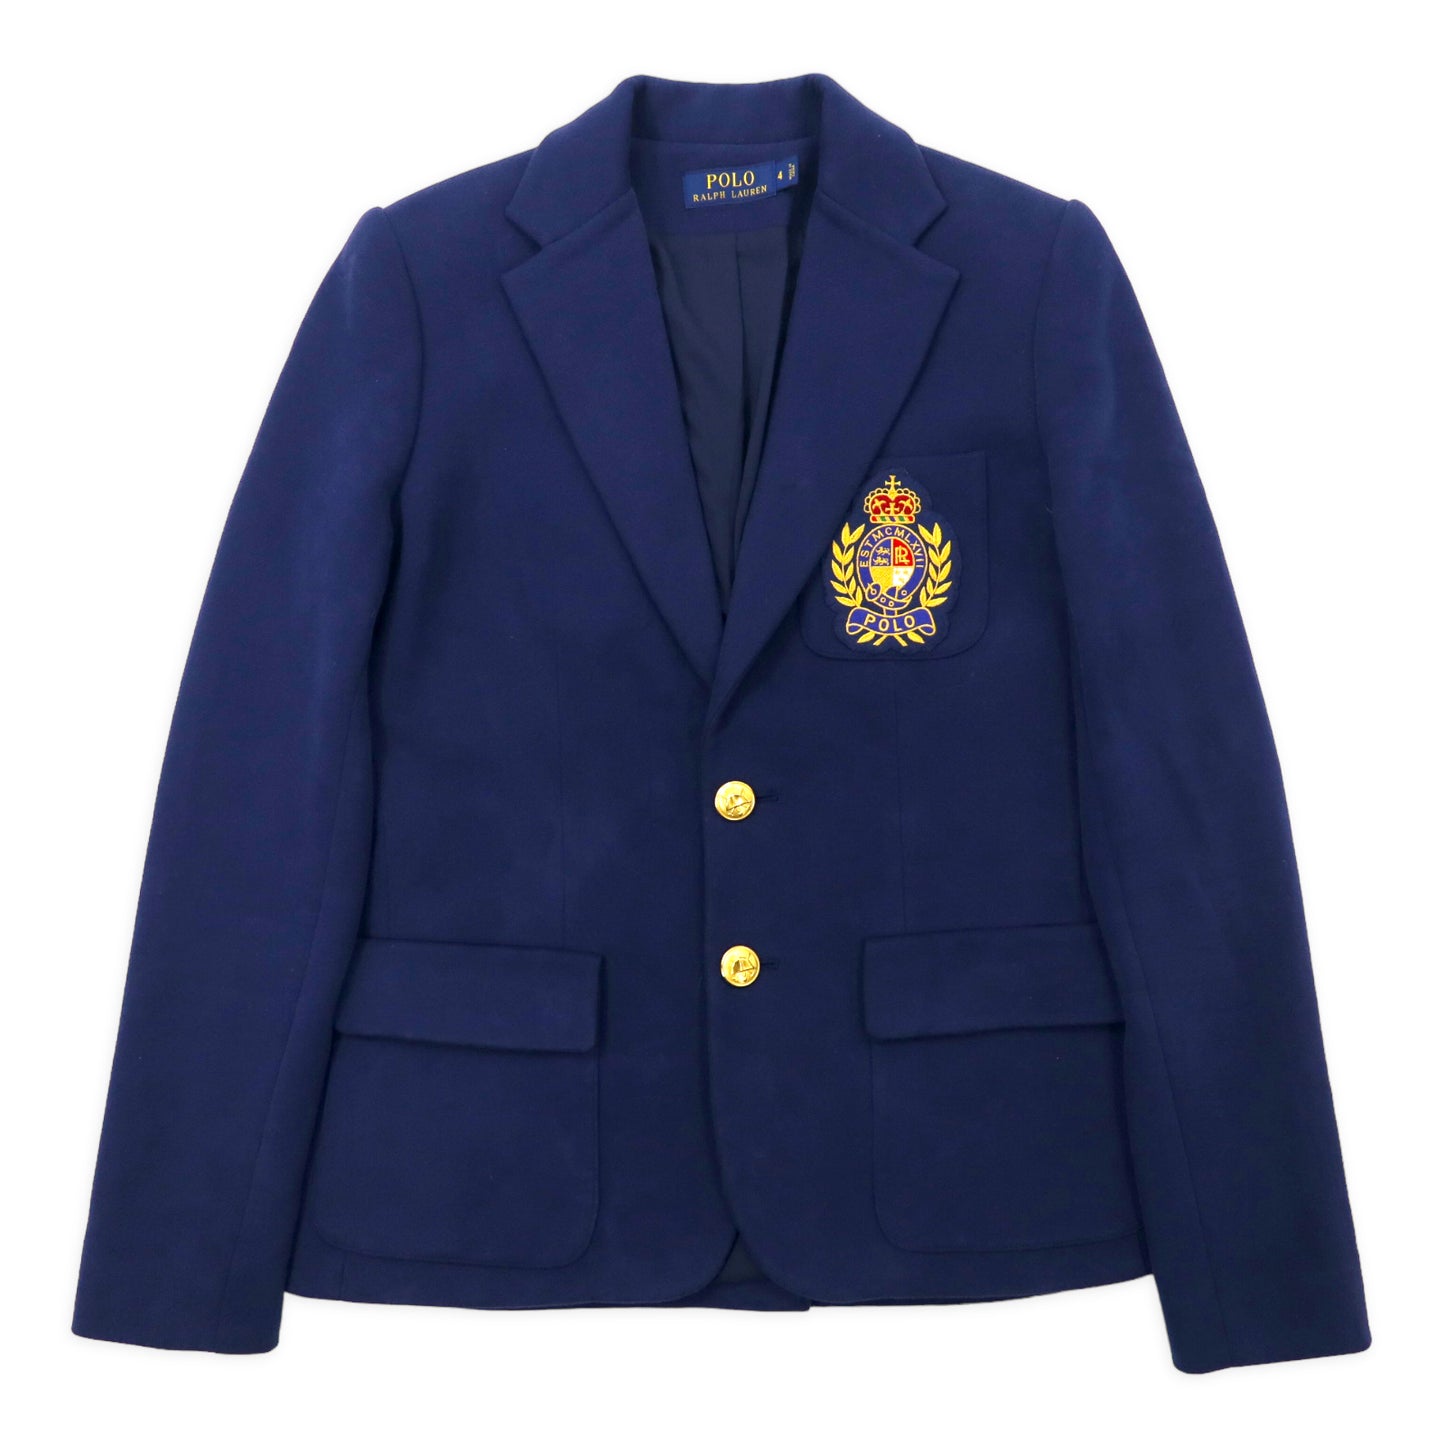 POLO RALPH LAUREN School Jacket Blazer 4 Navy Cotton Emblem Logo 